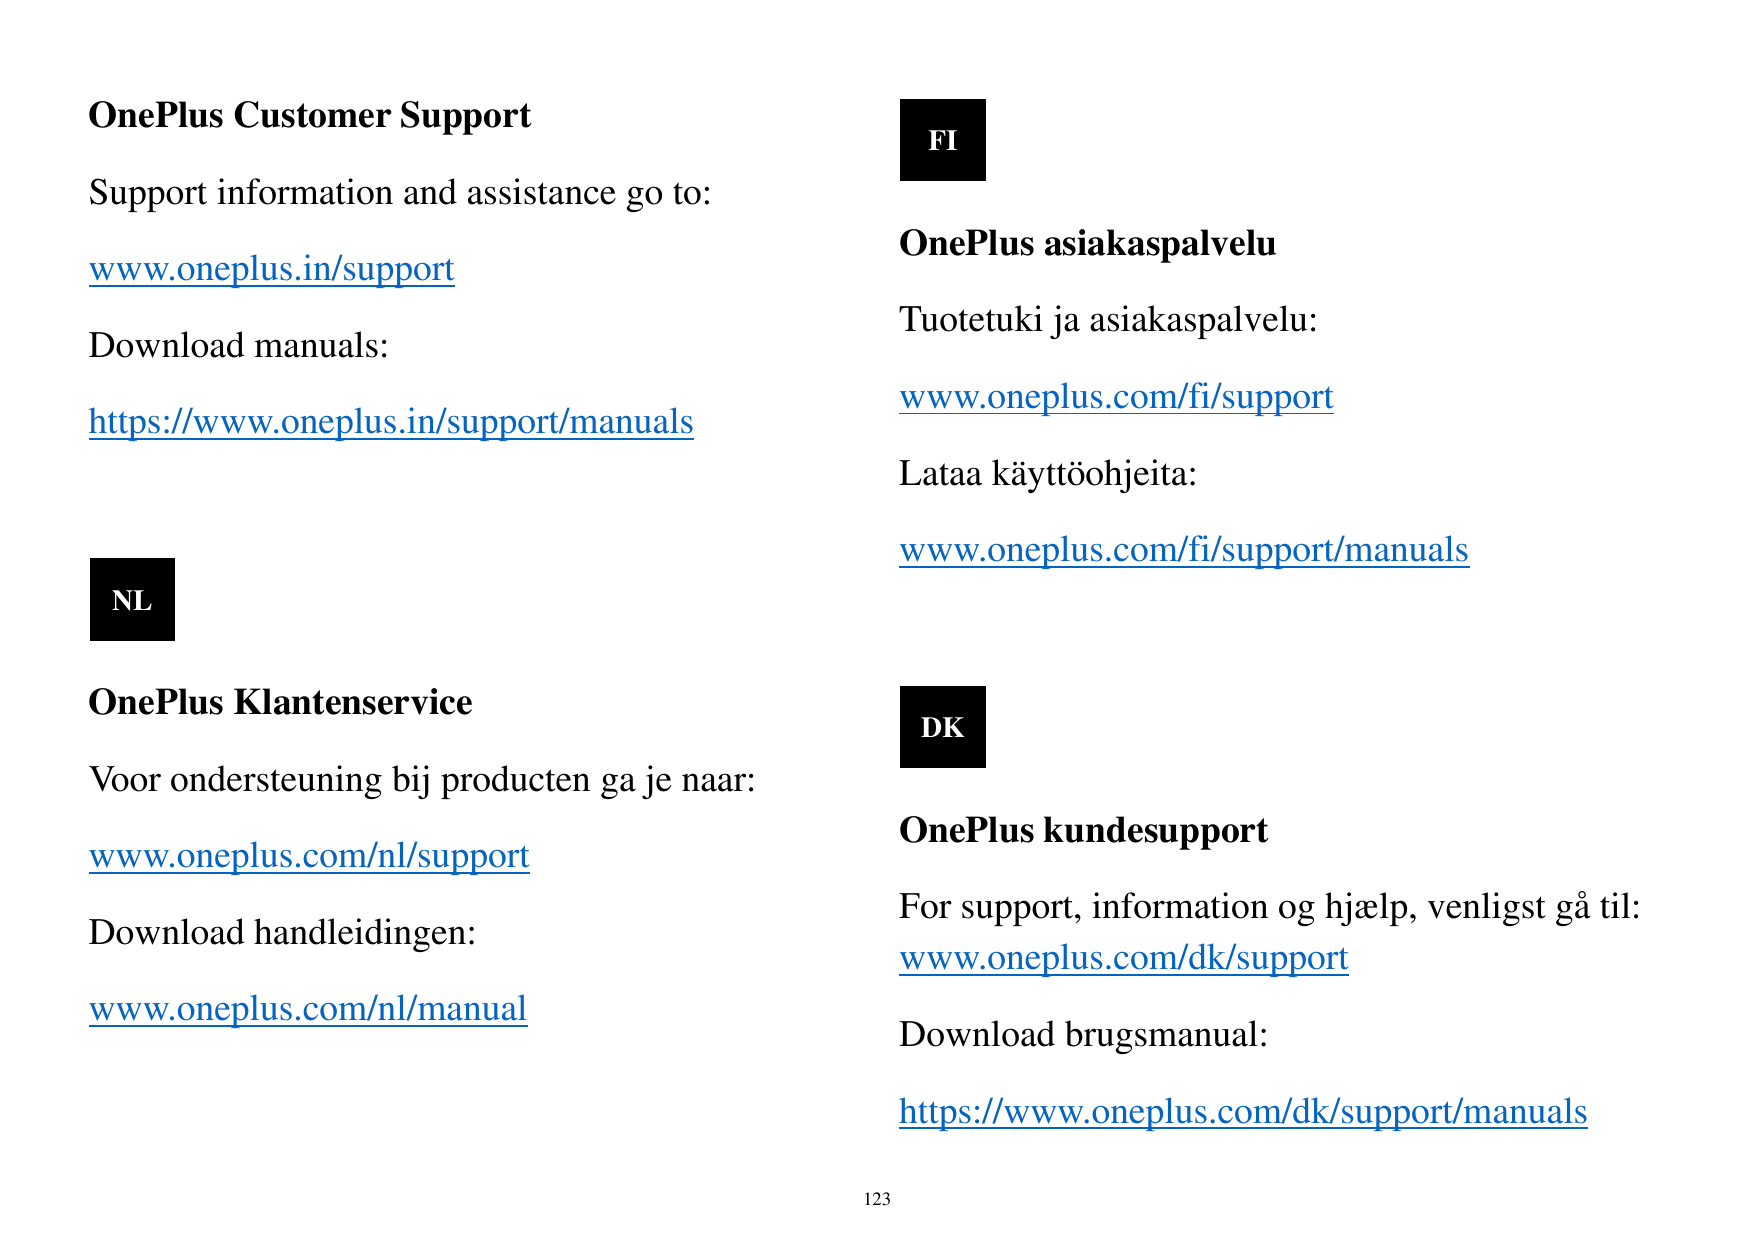 OnePlus Customer SupportFISupport information and assistance go to:OnePlus asiakaspalveluwww.oneplus.in/supportTuotetuki ja asia